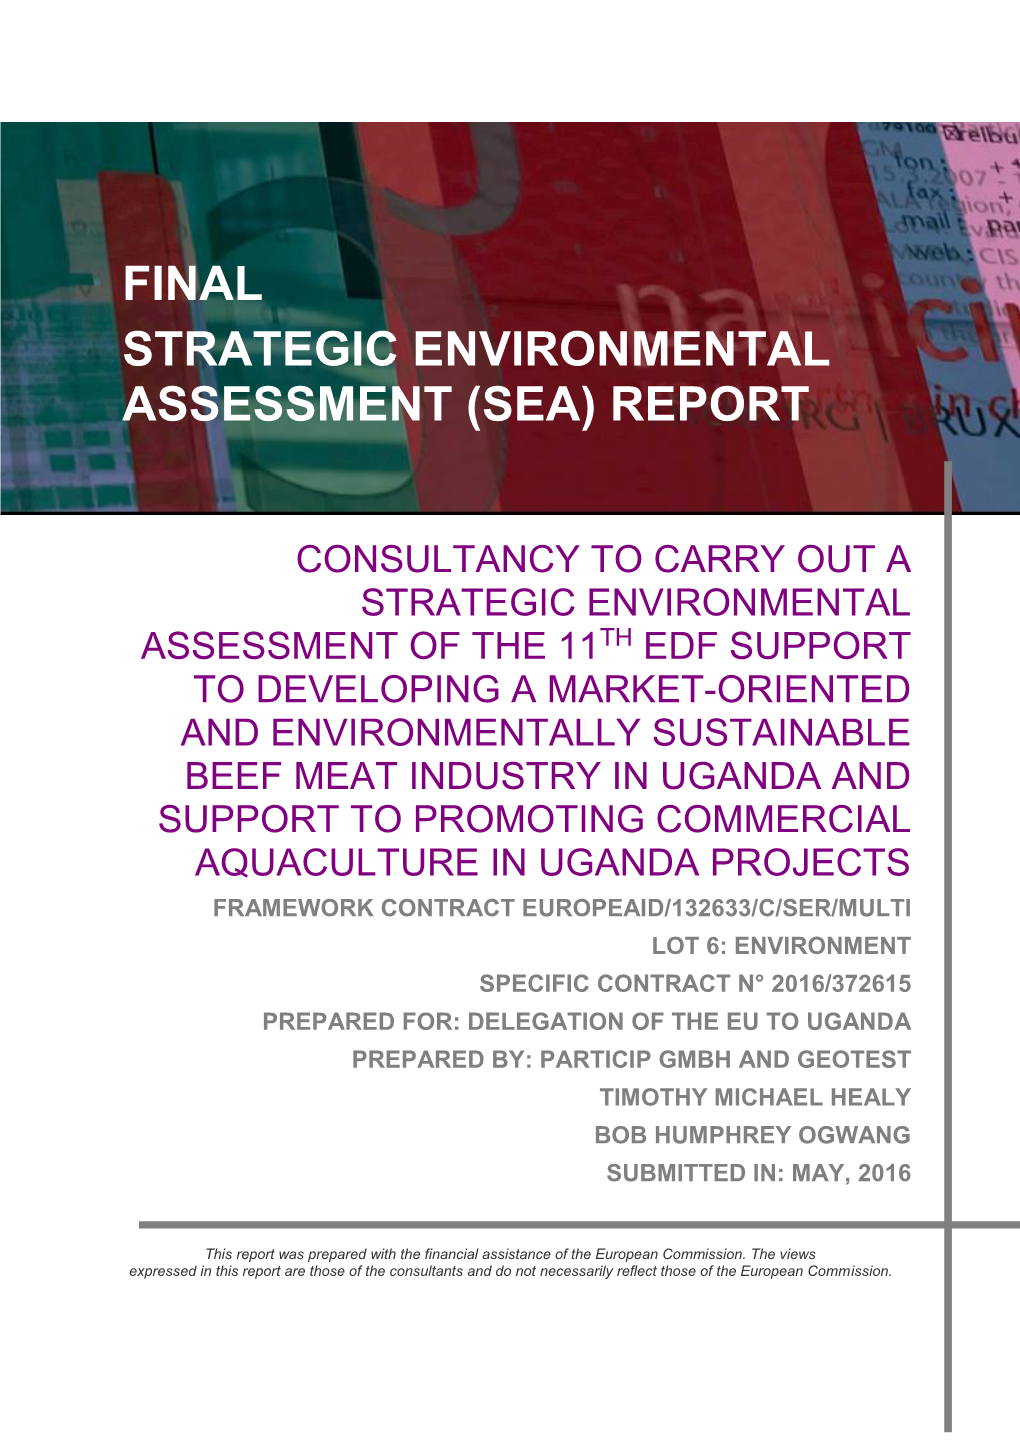 Final Strategic Environmental Assessment (Sea) Report